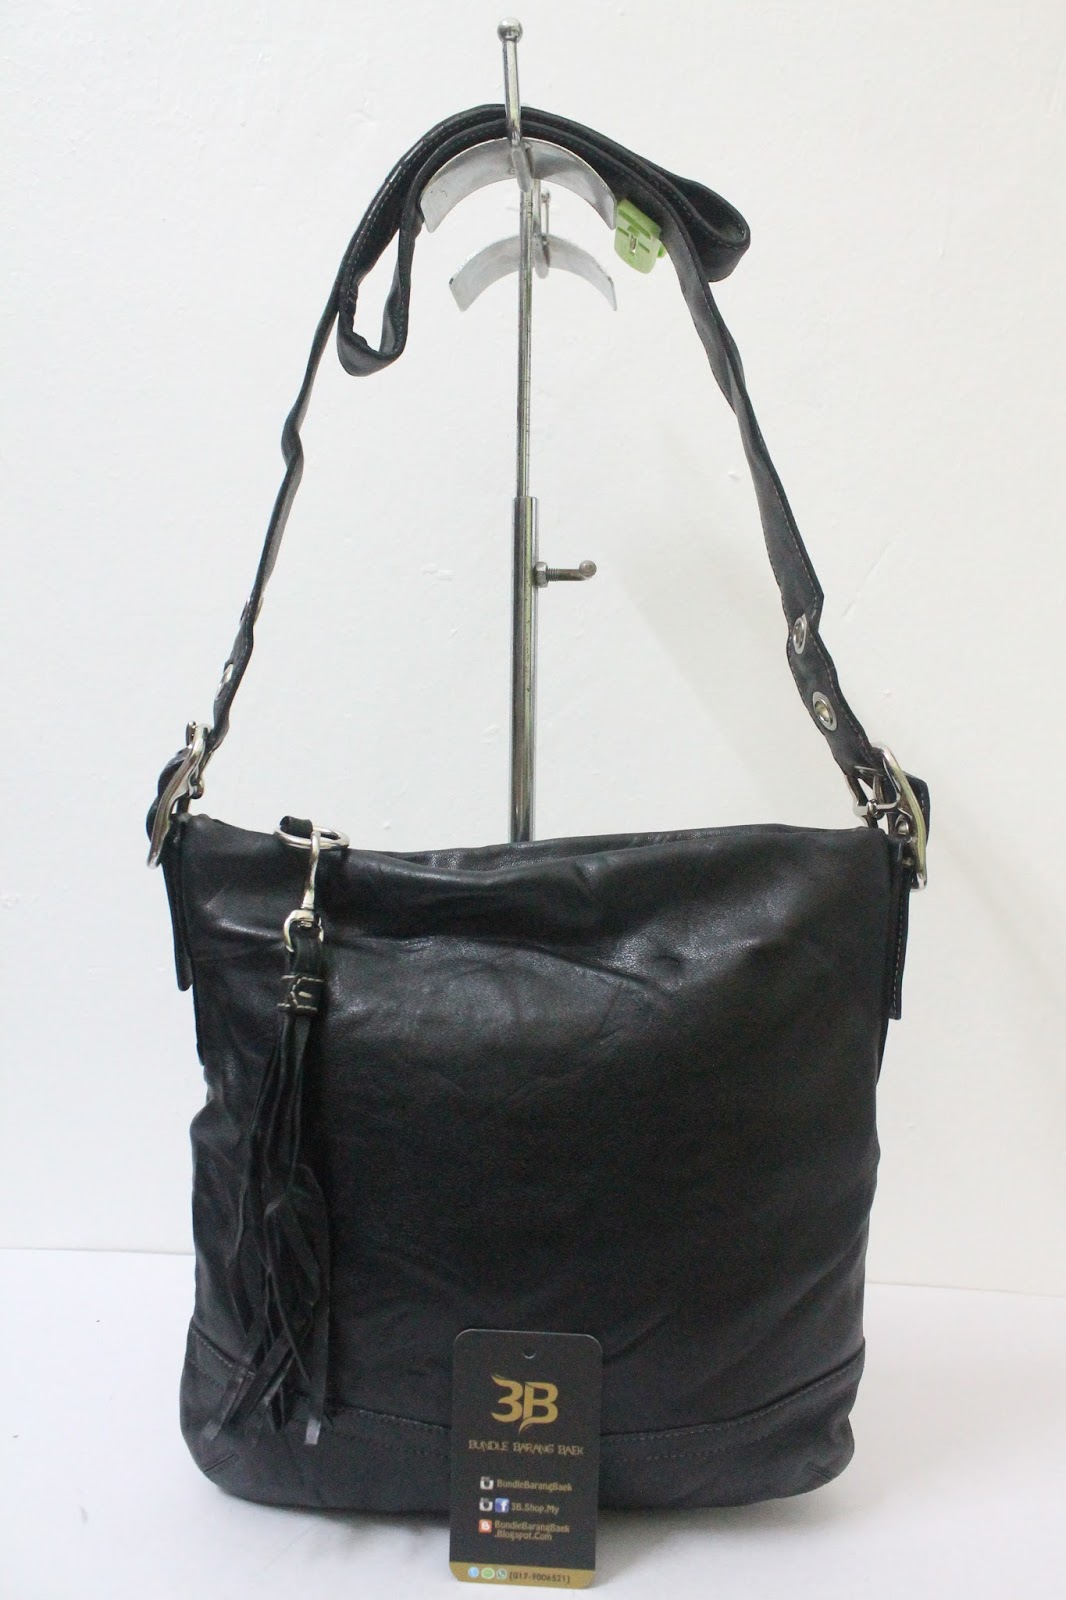 BUNDLEBARANGBAEK: Authentic COACH Leather Crossbody bag.